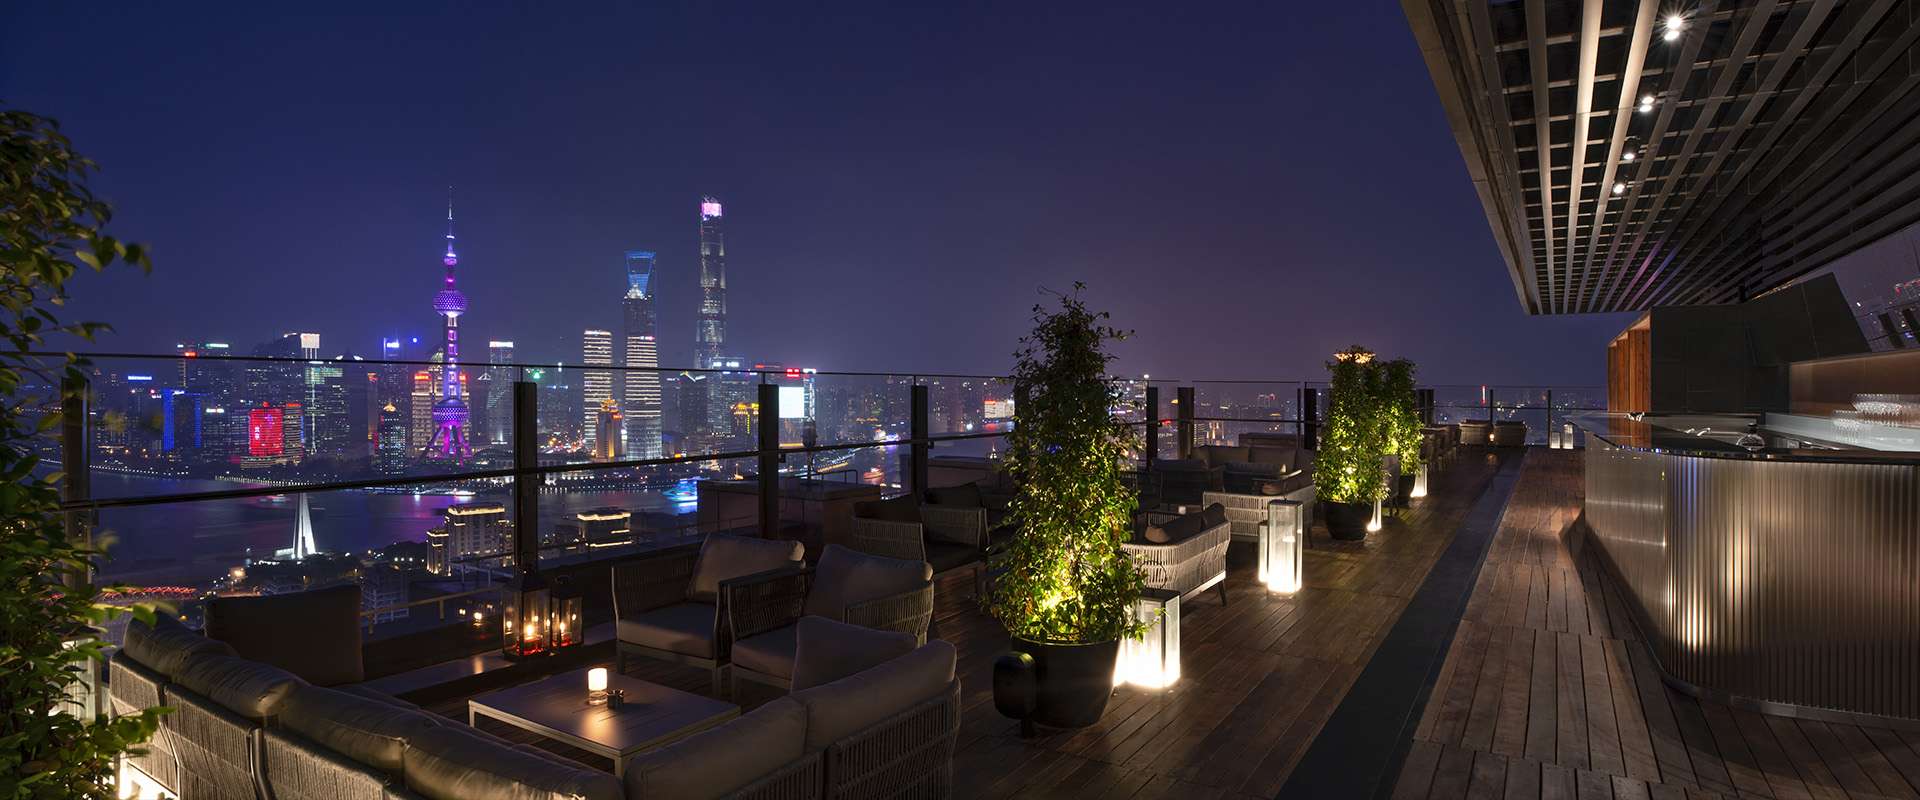 la Terrazza by night at The Bvlgari Hotel Shanghai